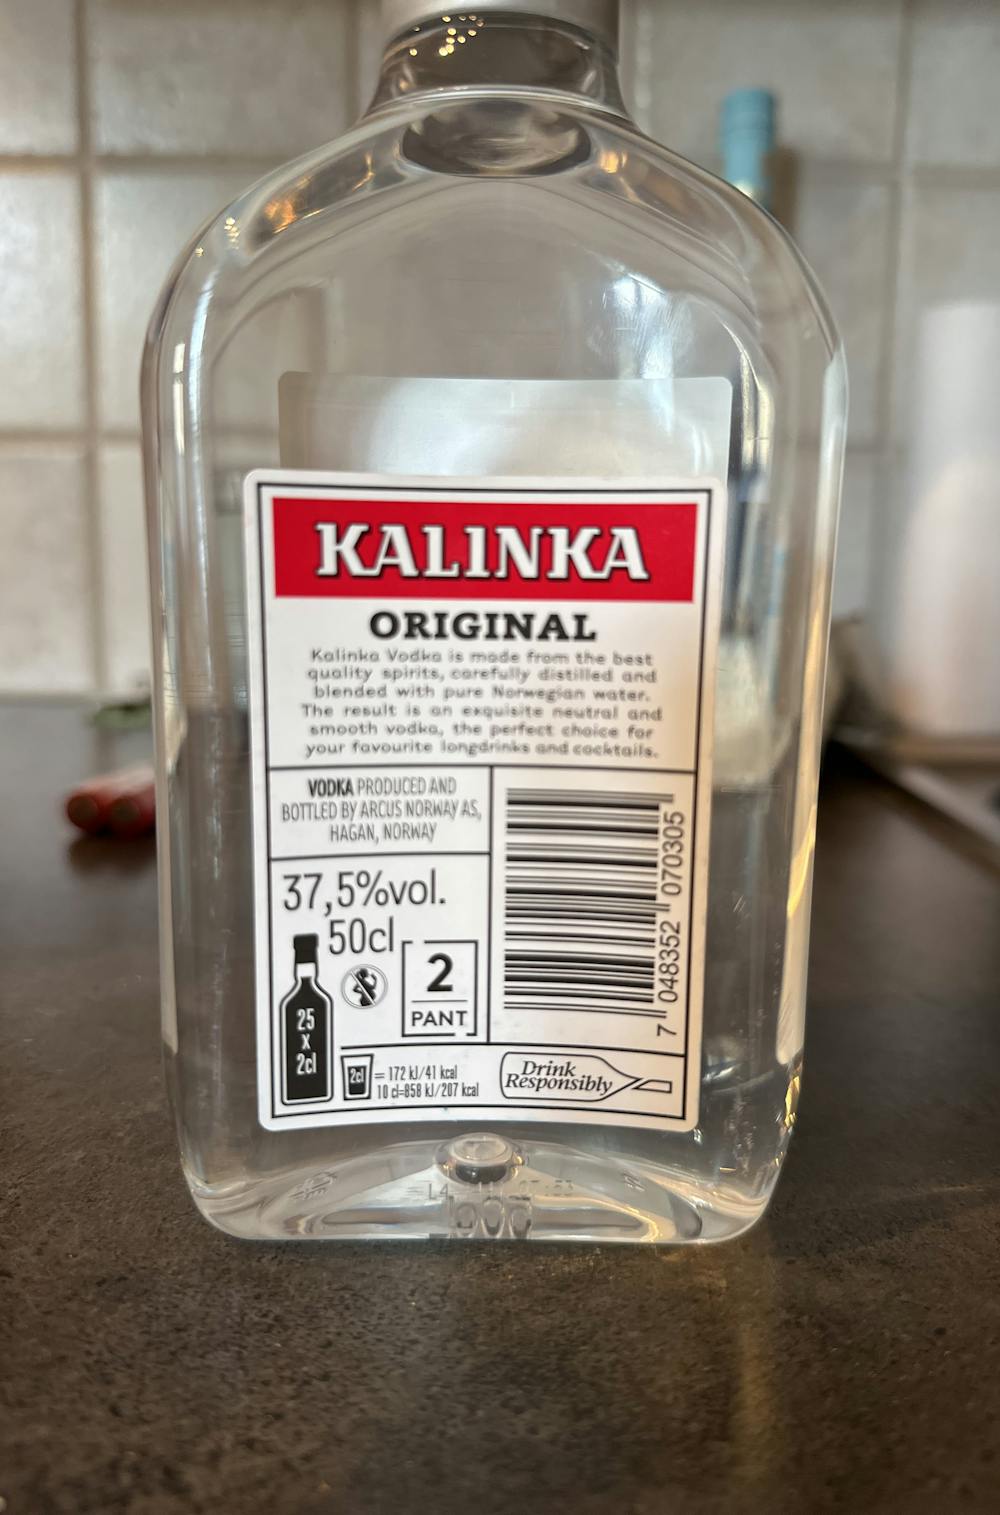 Ingrediensliste - Vodka, Kalinka